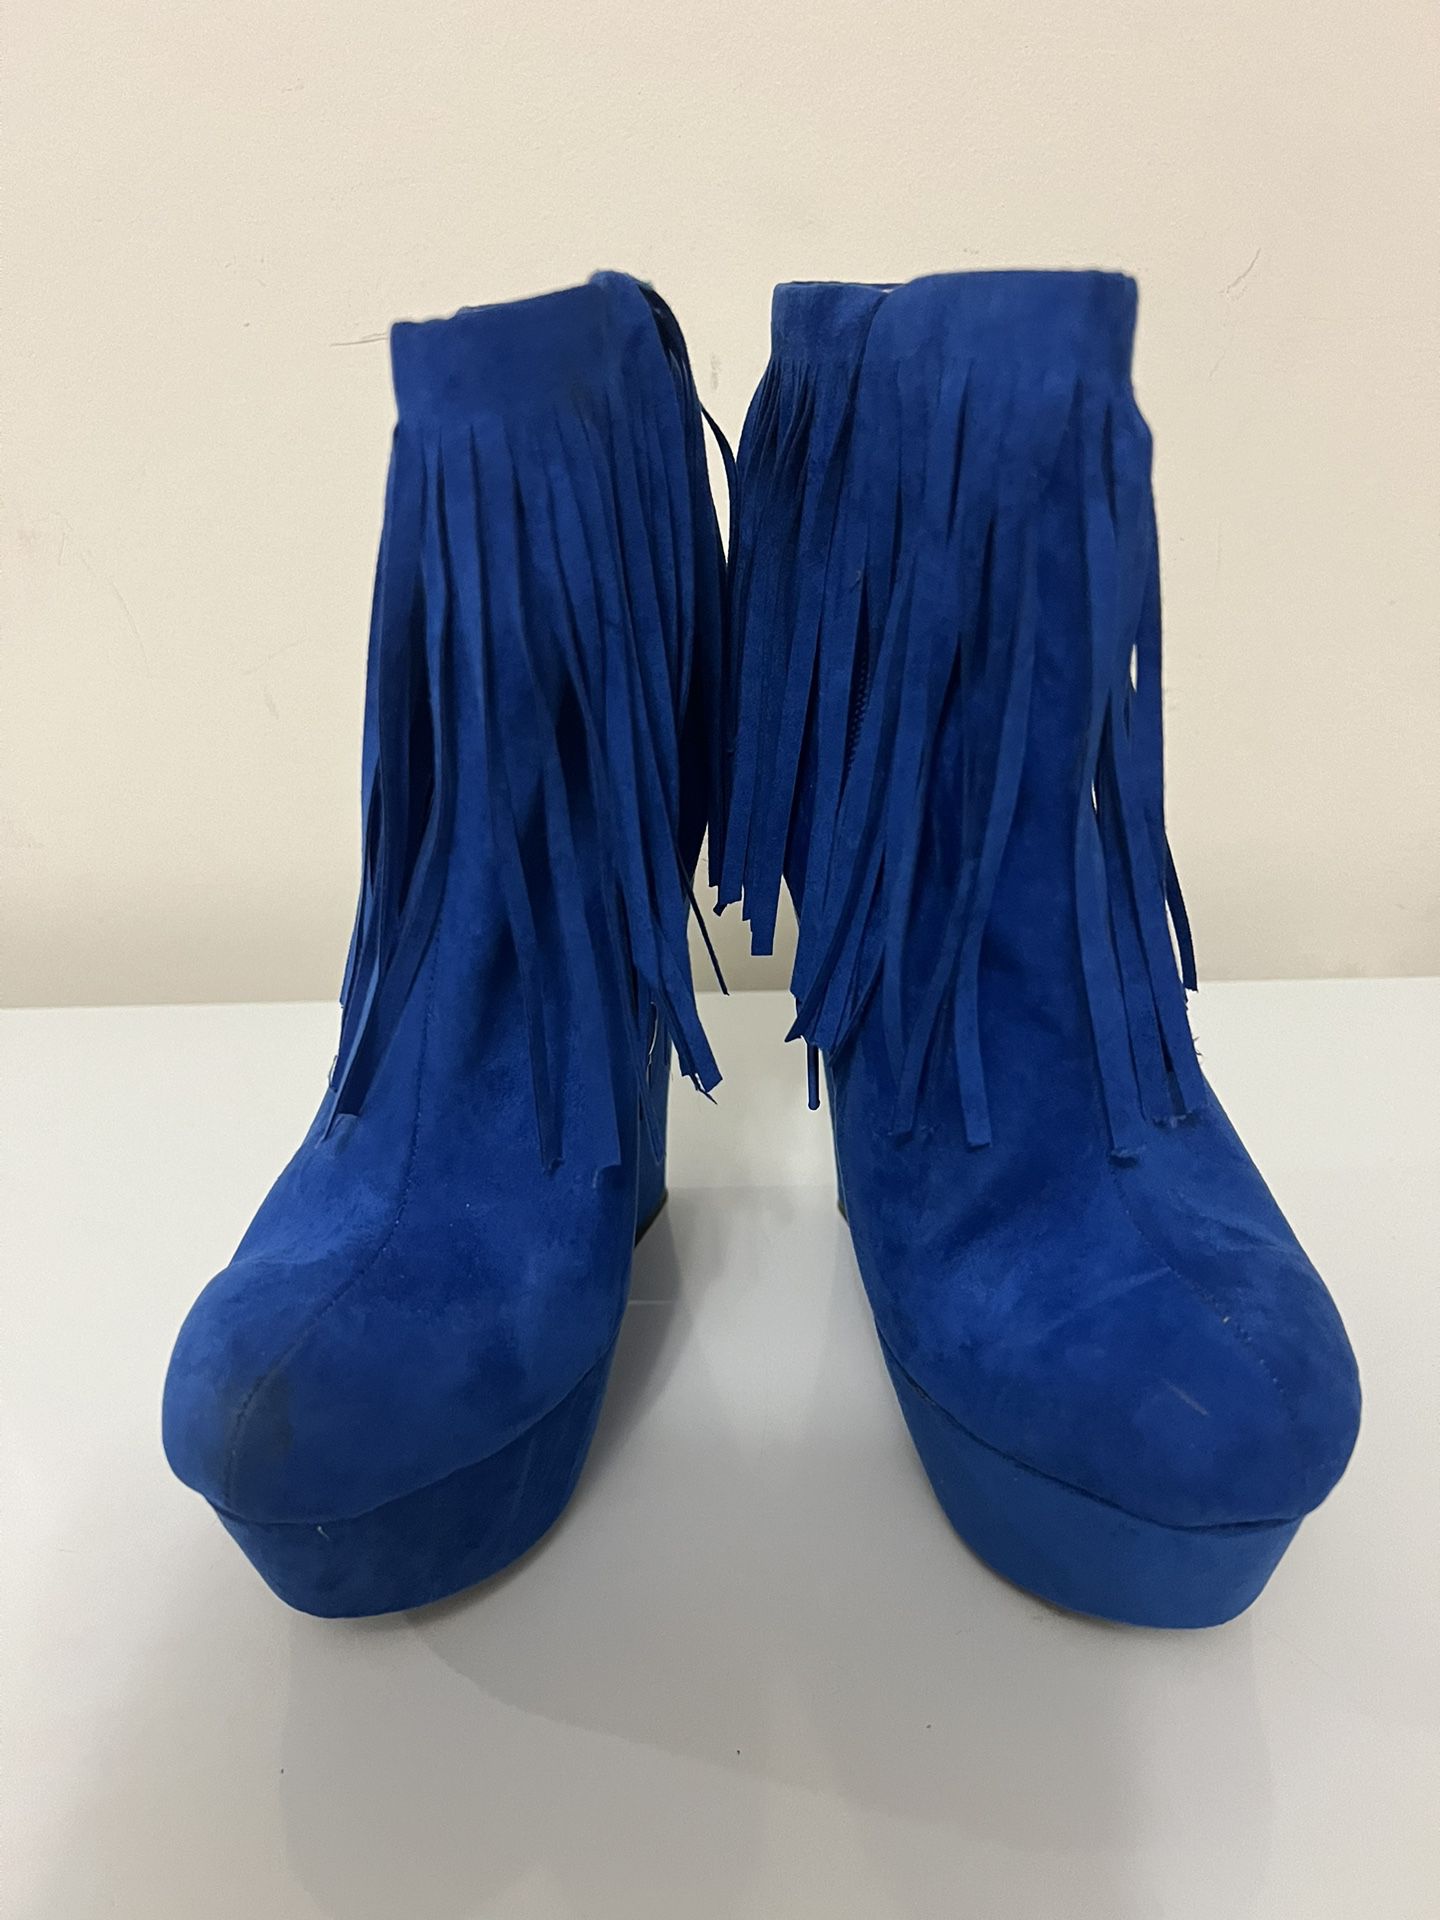 Blue Suede Fringe Leather Tassels Ankle Cowboy Boots Women FRH Fashion Design size 8